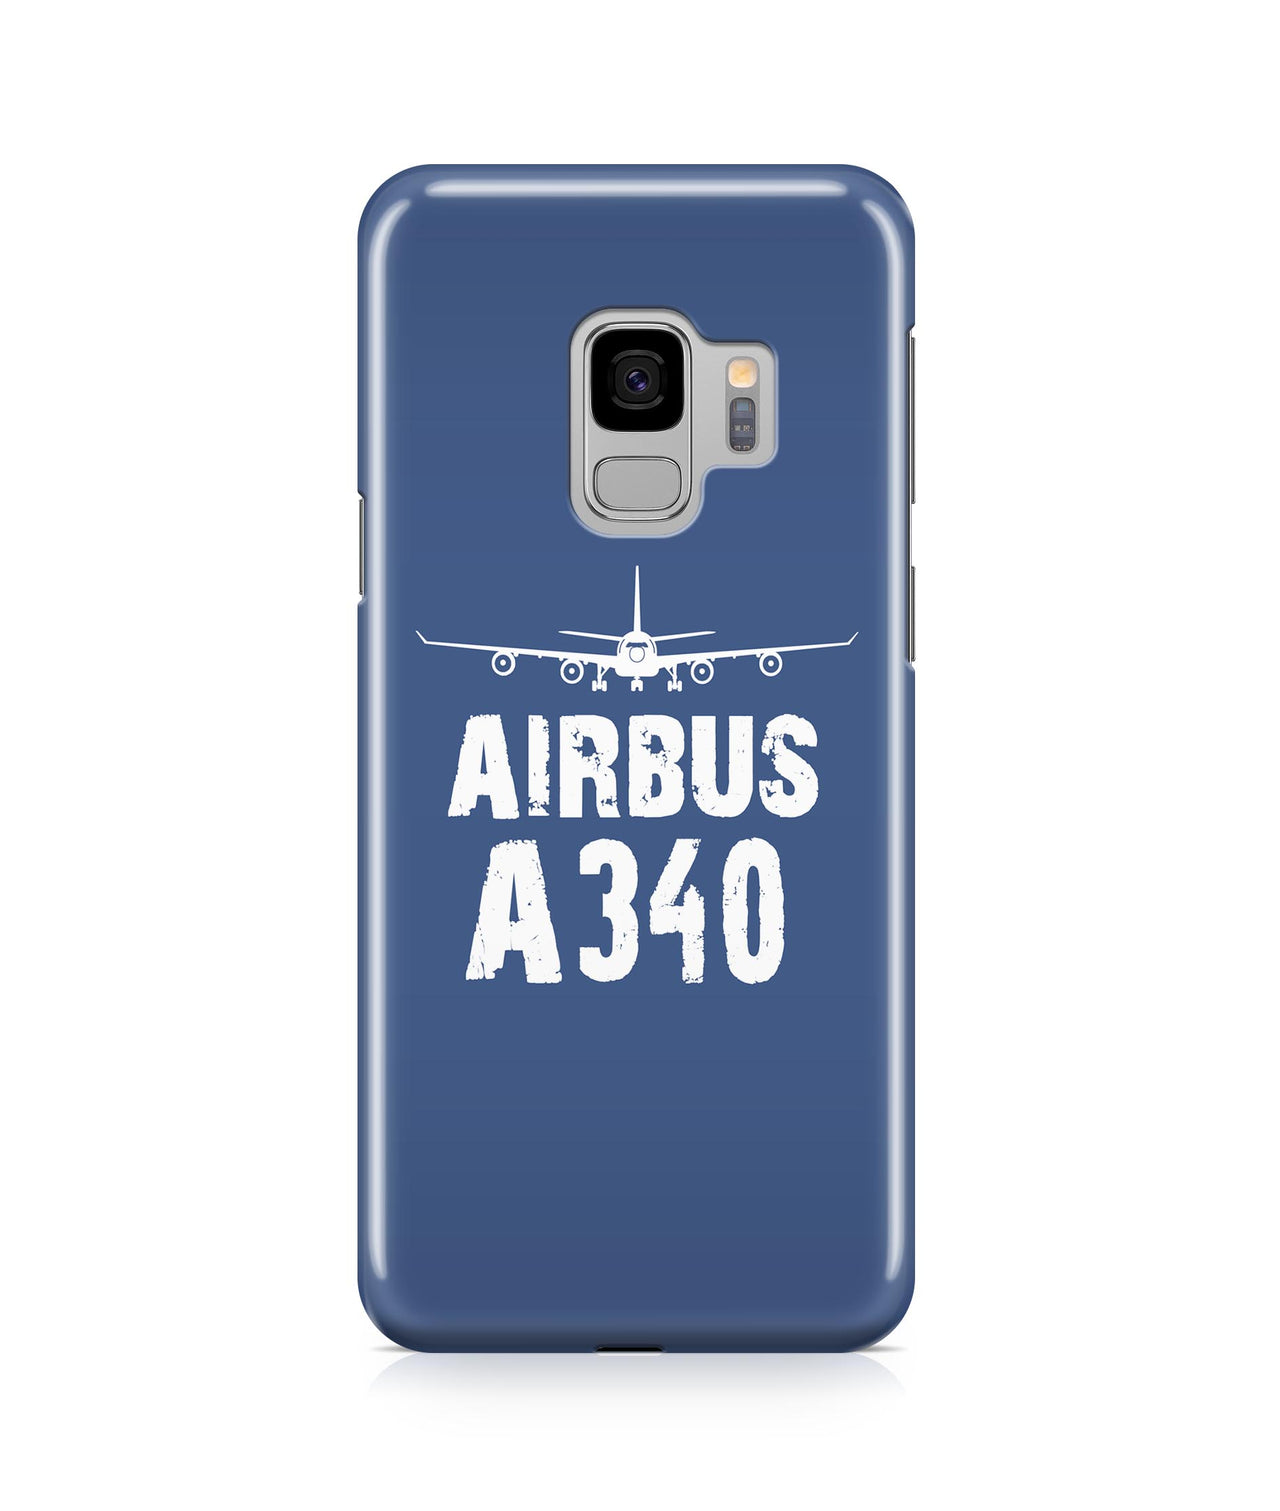 Airbus A340 Plane & Designed Samsung J Cases